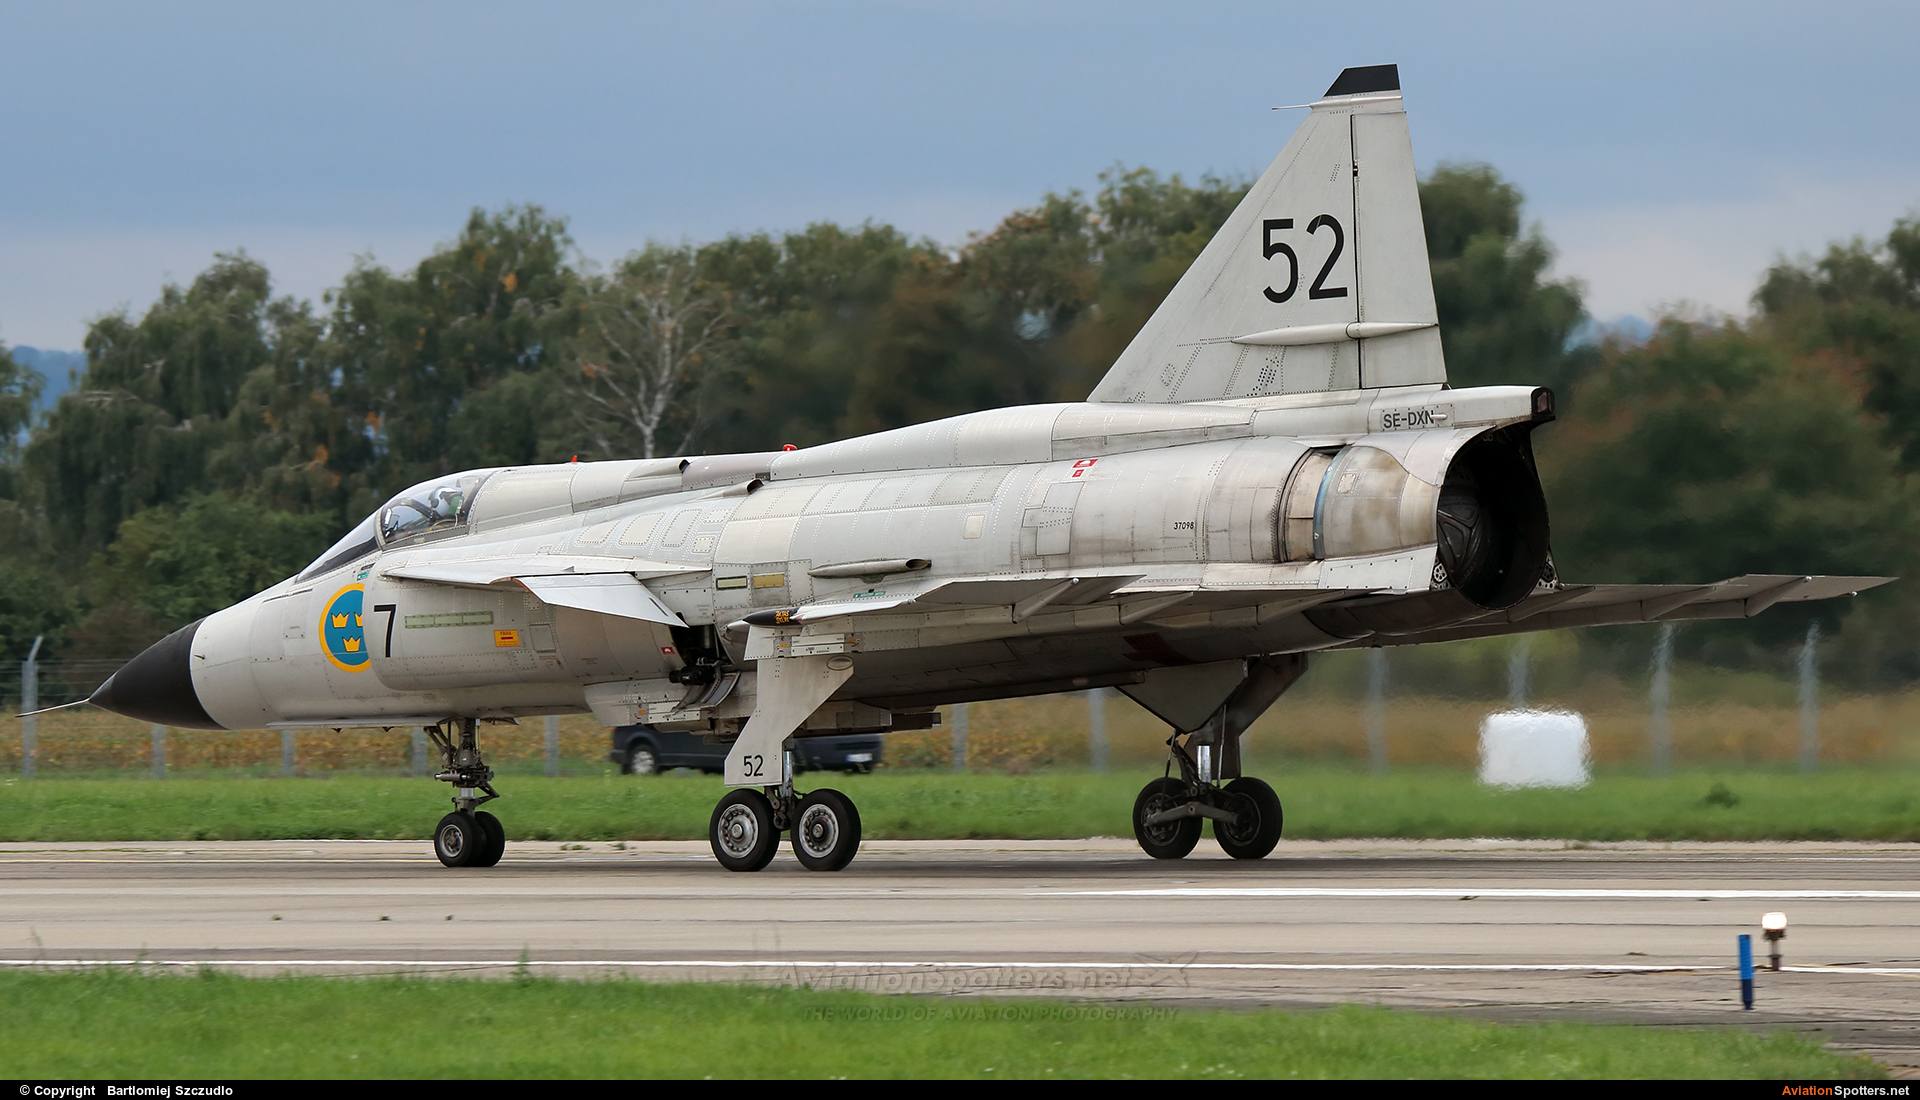 Swedish Air Force Historic Flight  -  AJSH 37 Viggen  (SE-DXN) By Bartlomiej Szczudlo  (BartekSzczudlo)